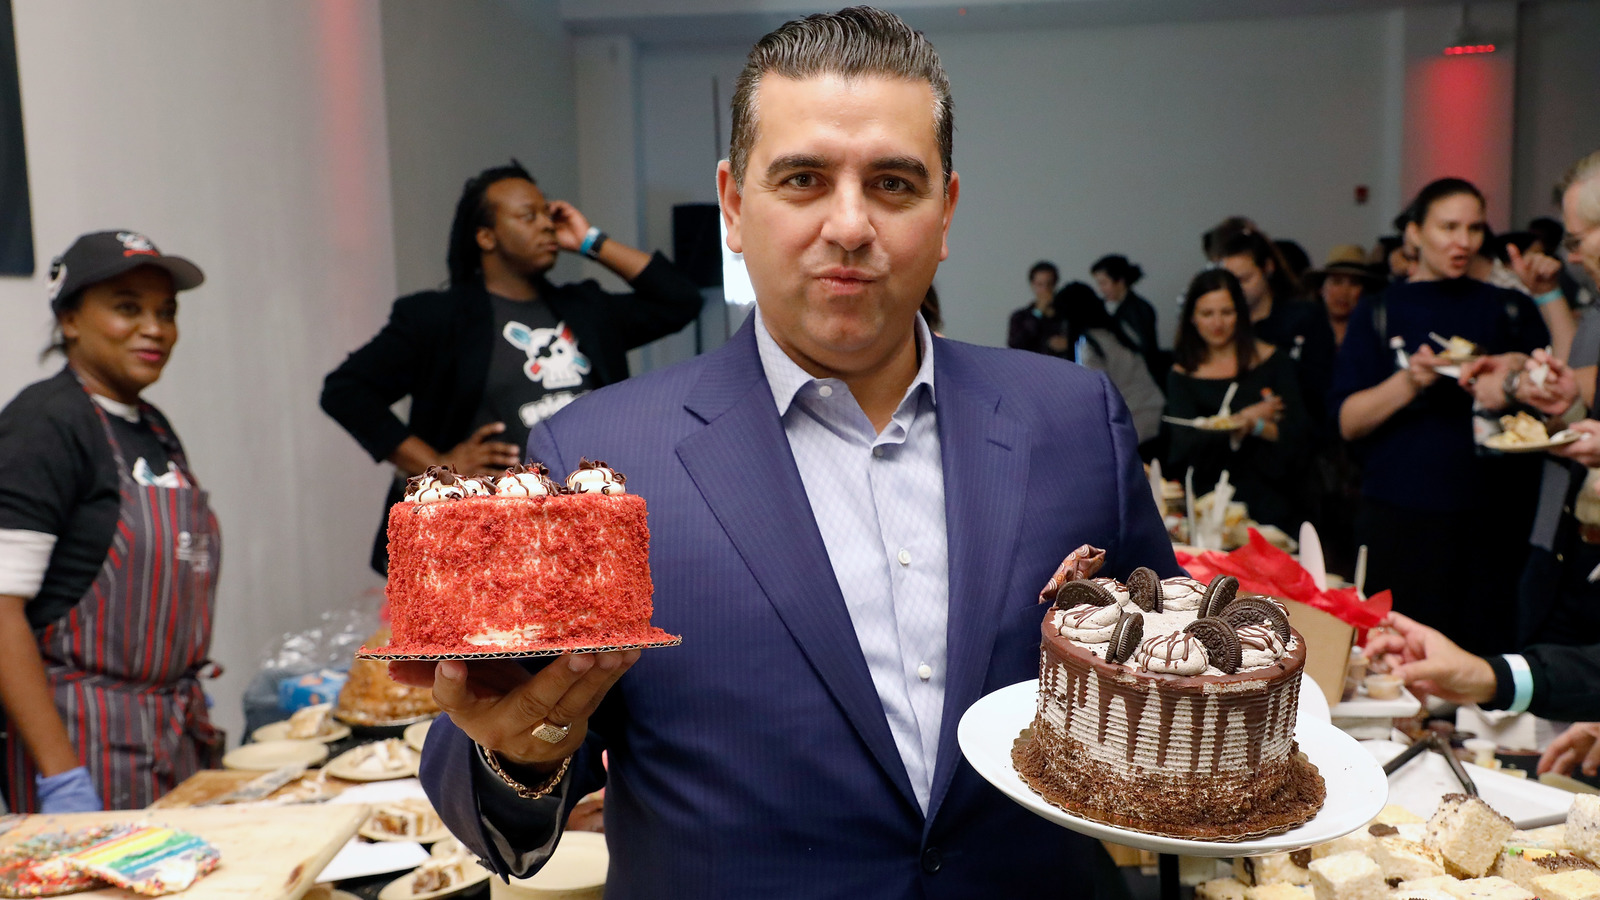 Cake Boss Buddy Valastro's wife Lisa has closet the size of an APARTMENT |  David Tutera's CELEBrations exclusive